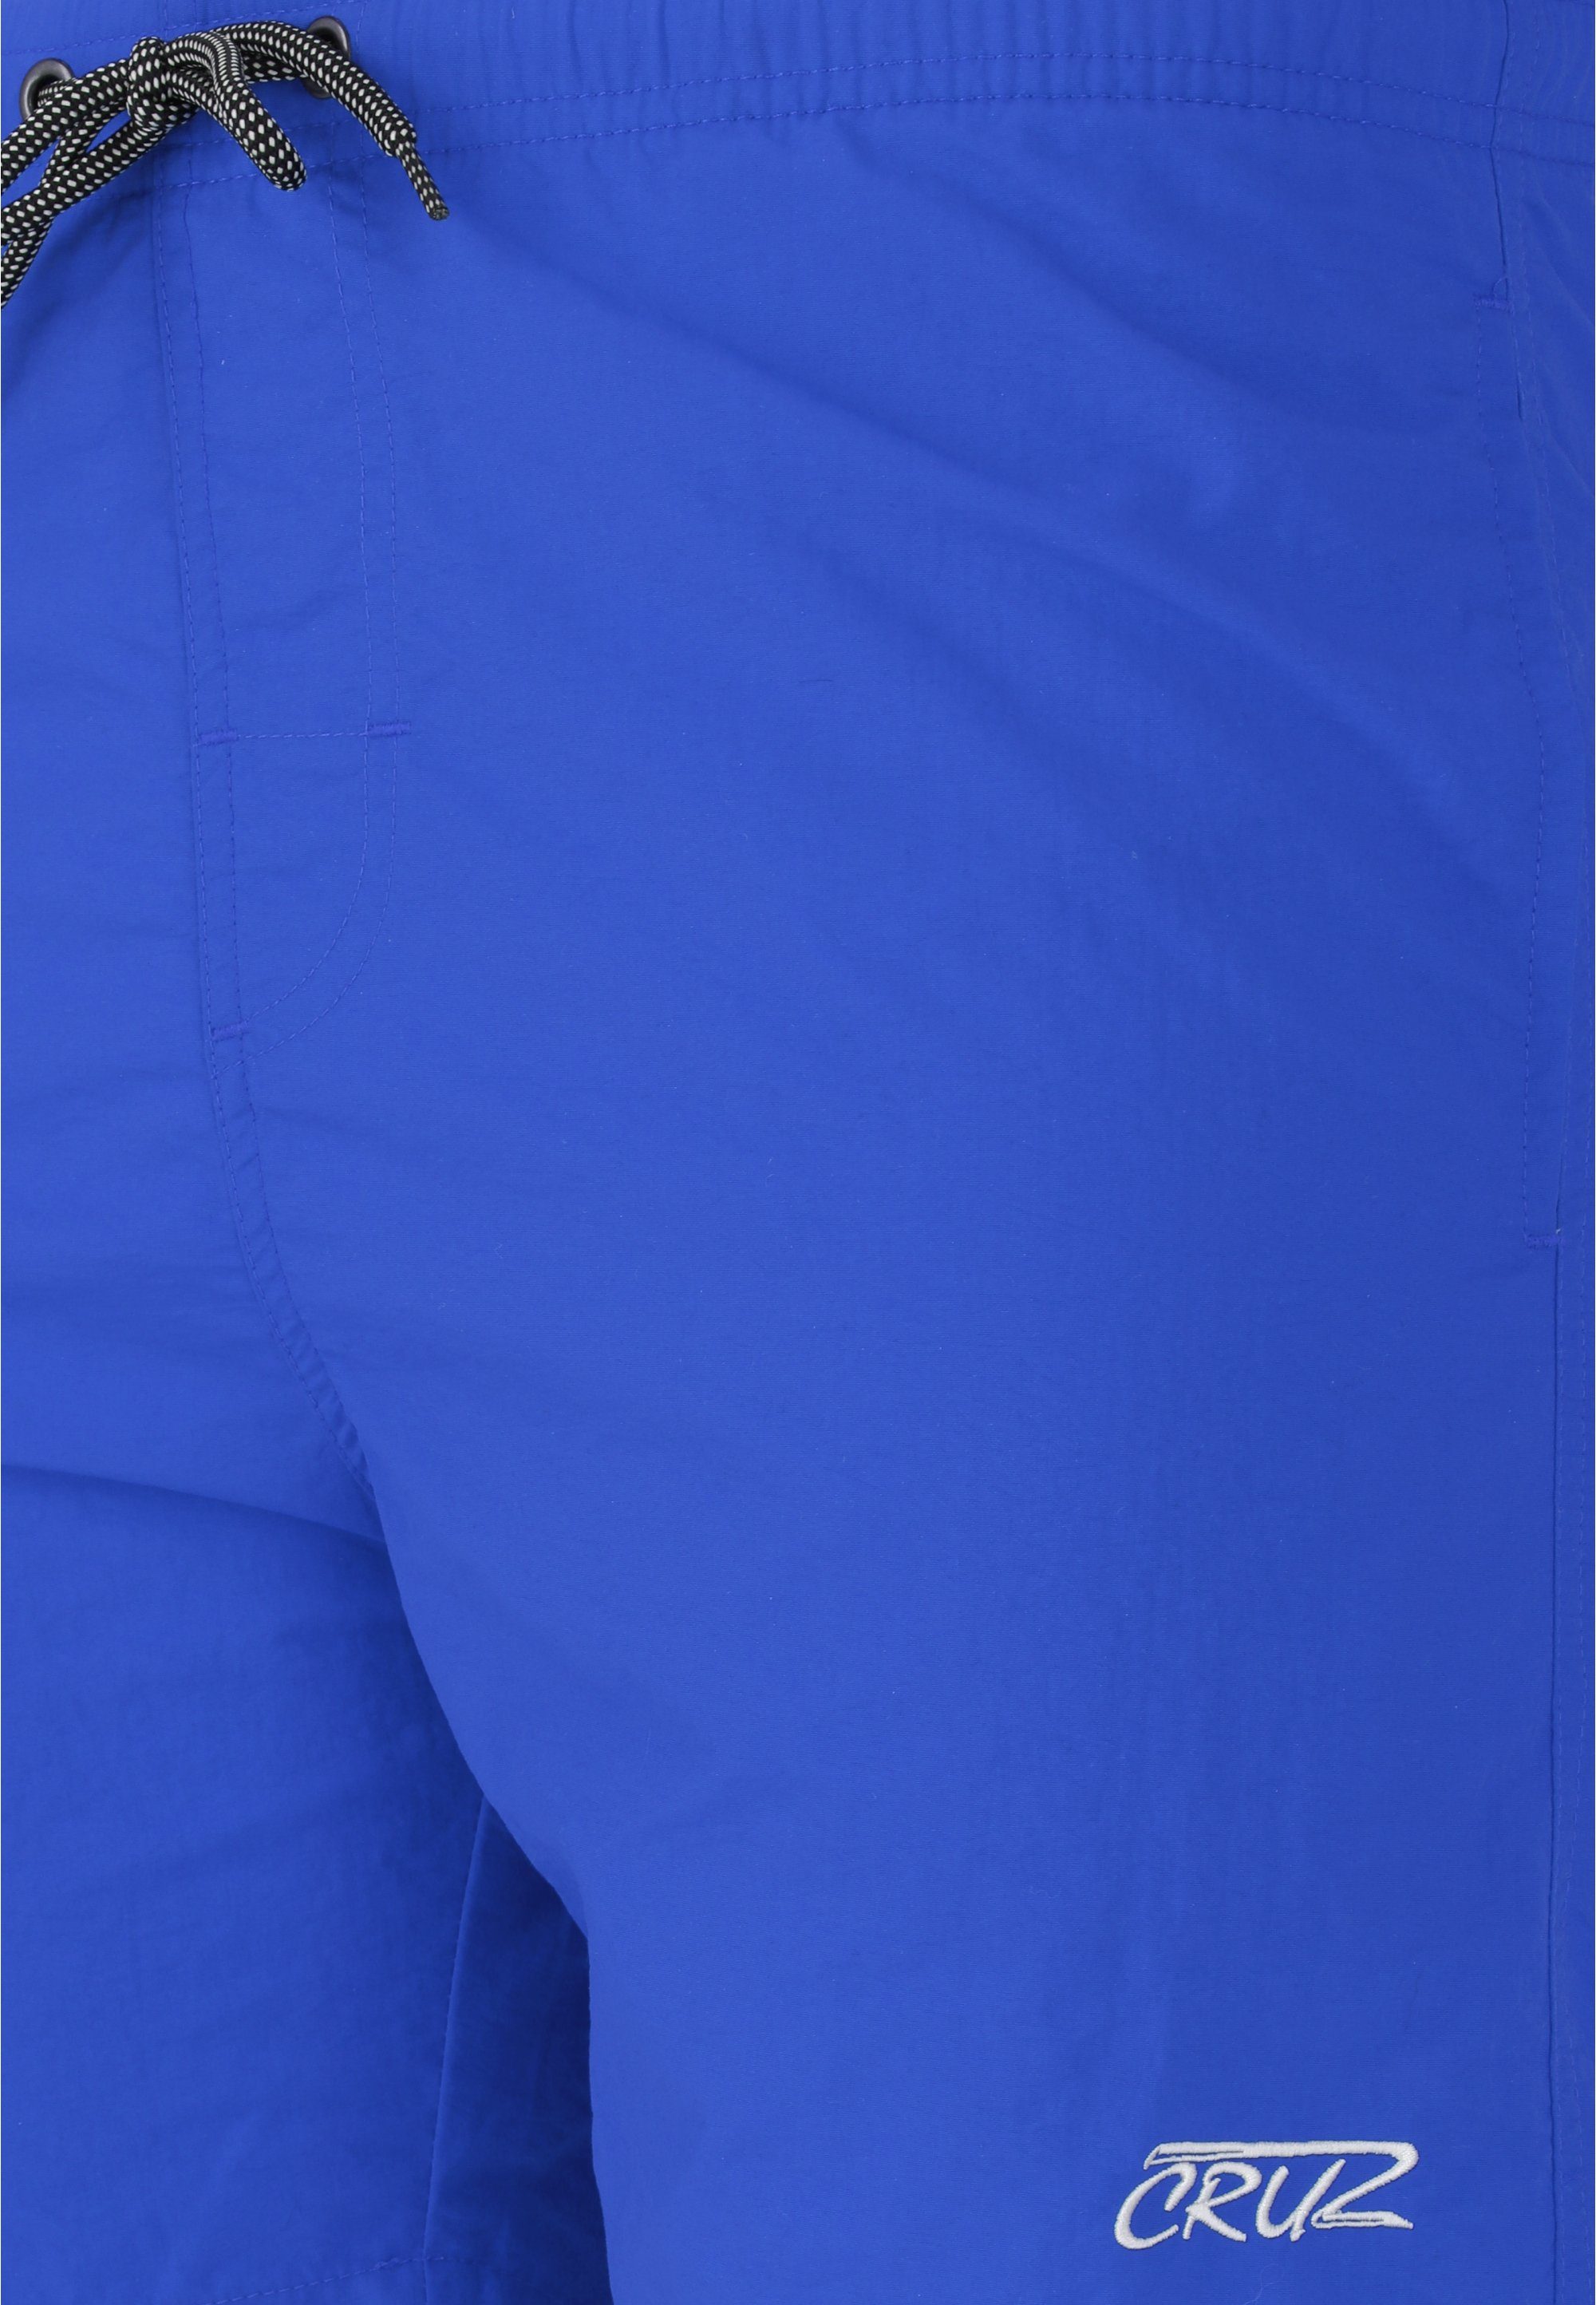 CRUZ Badehose Clemont blau in klassischem Design